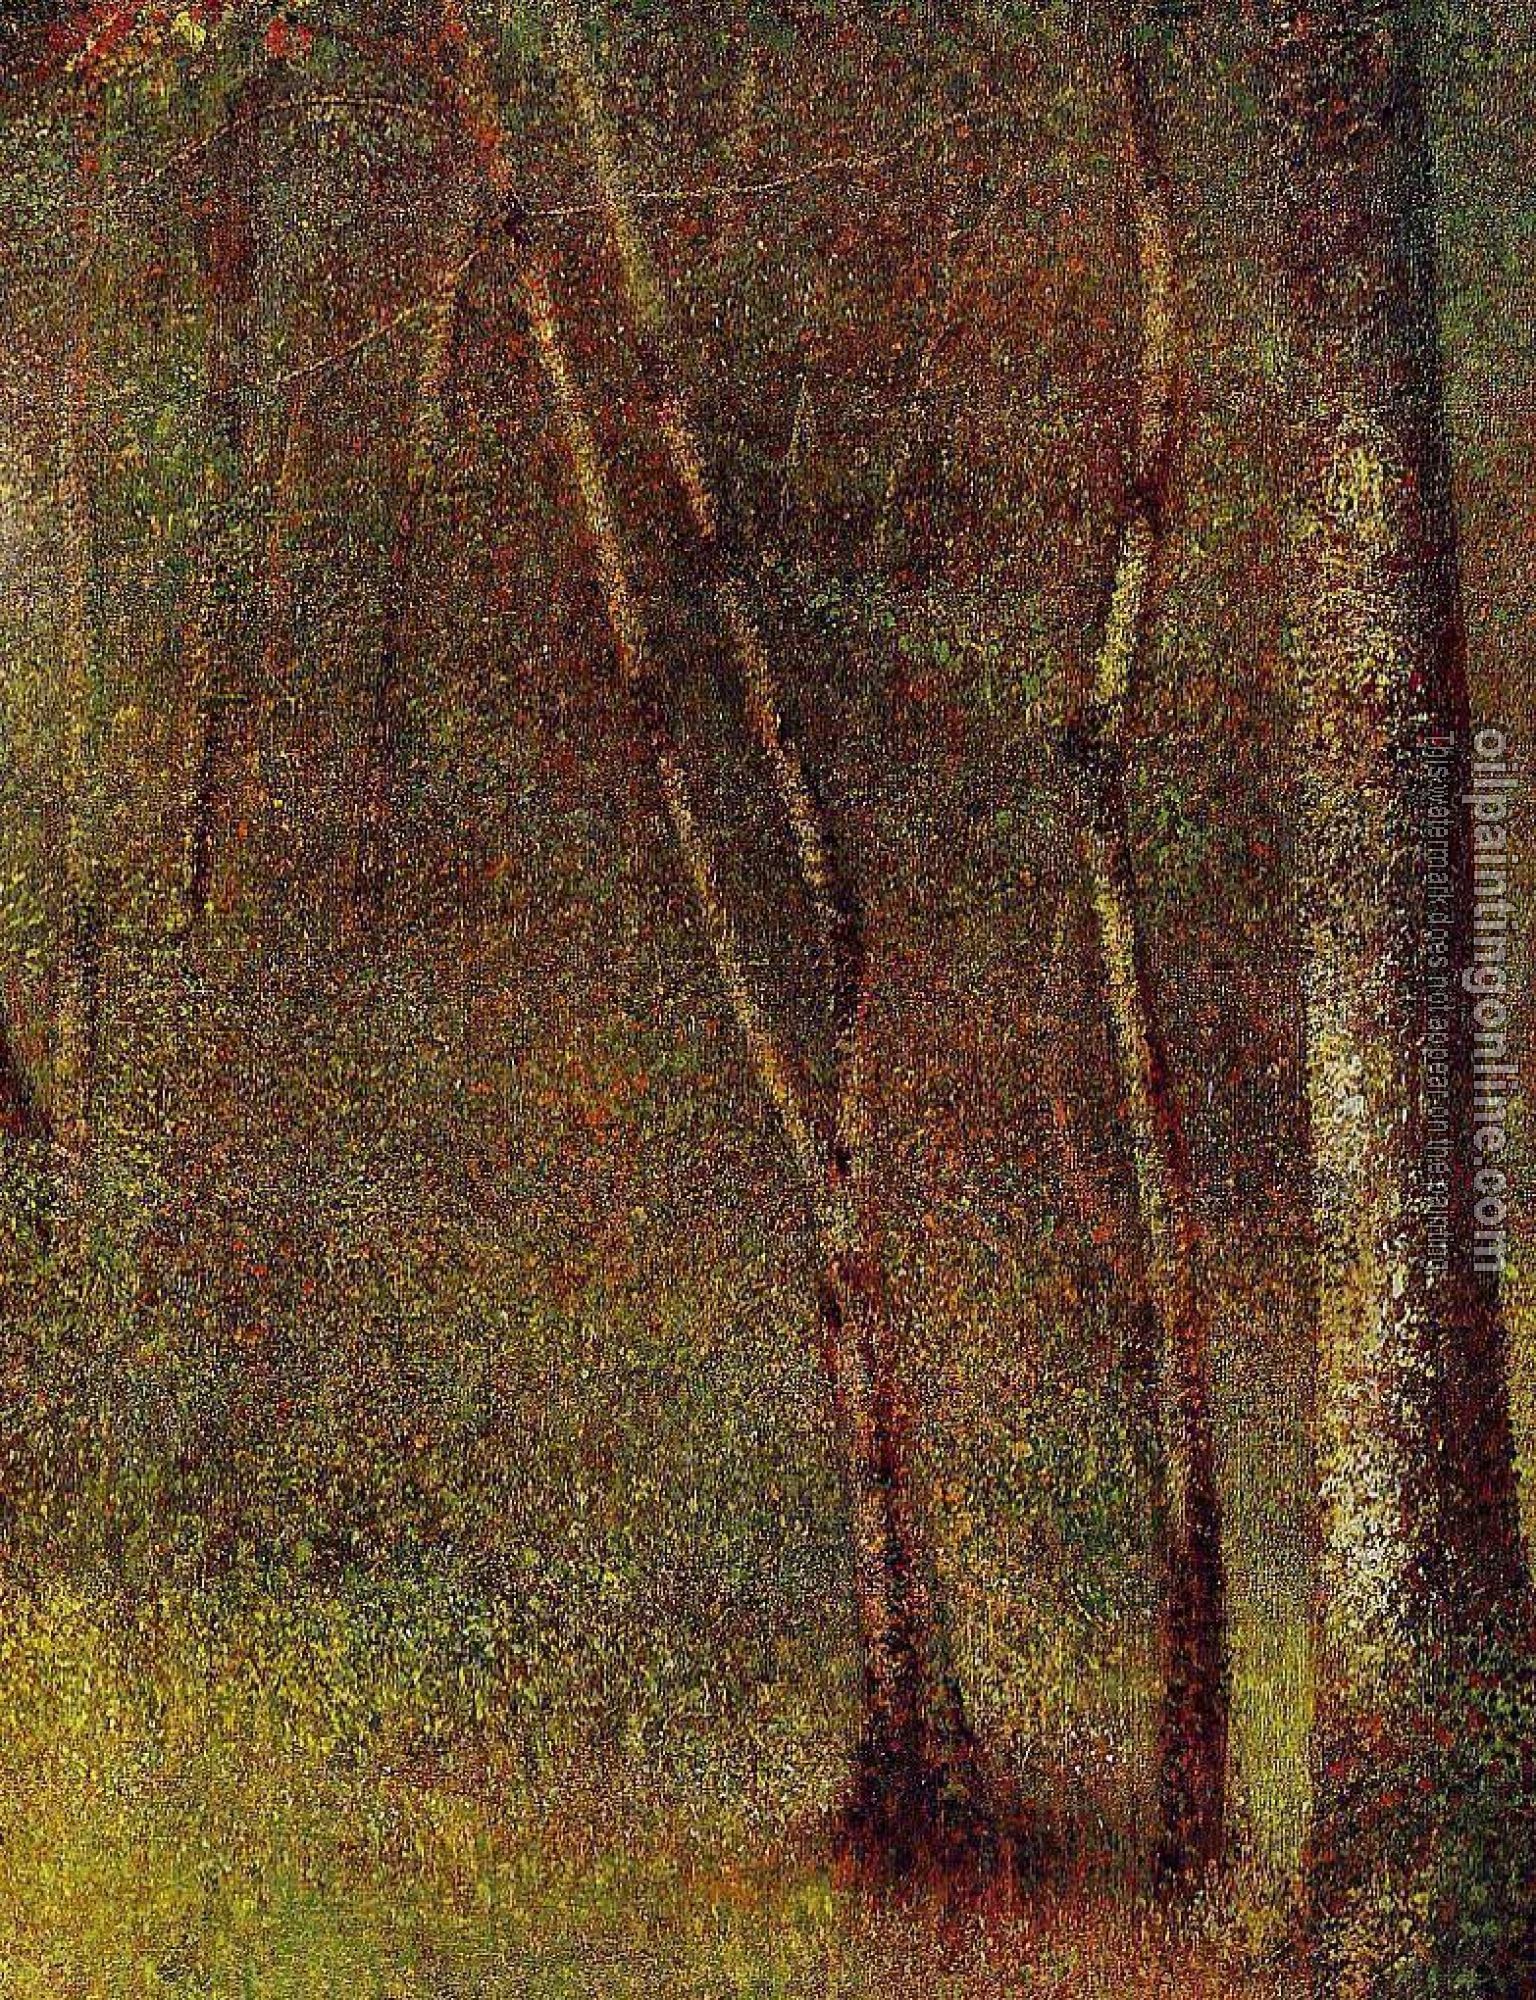 Seurat, Georges - In the Woods at Pontaubert